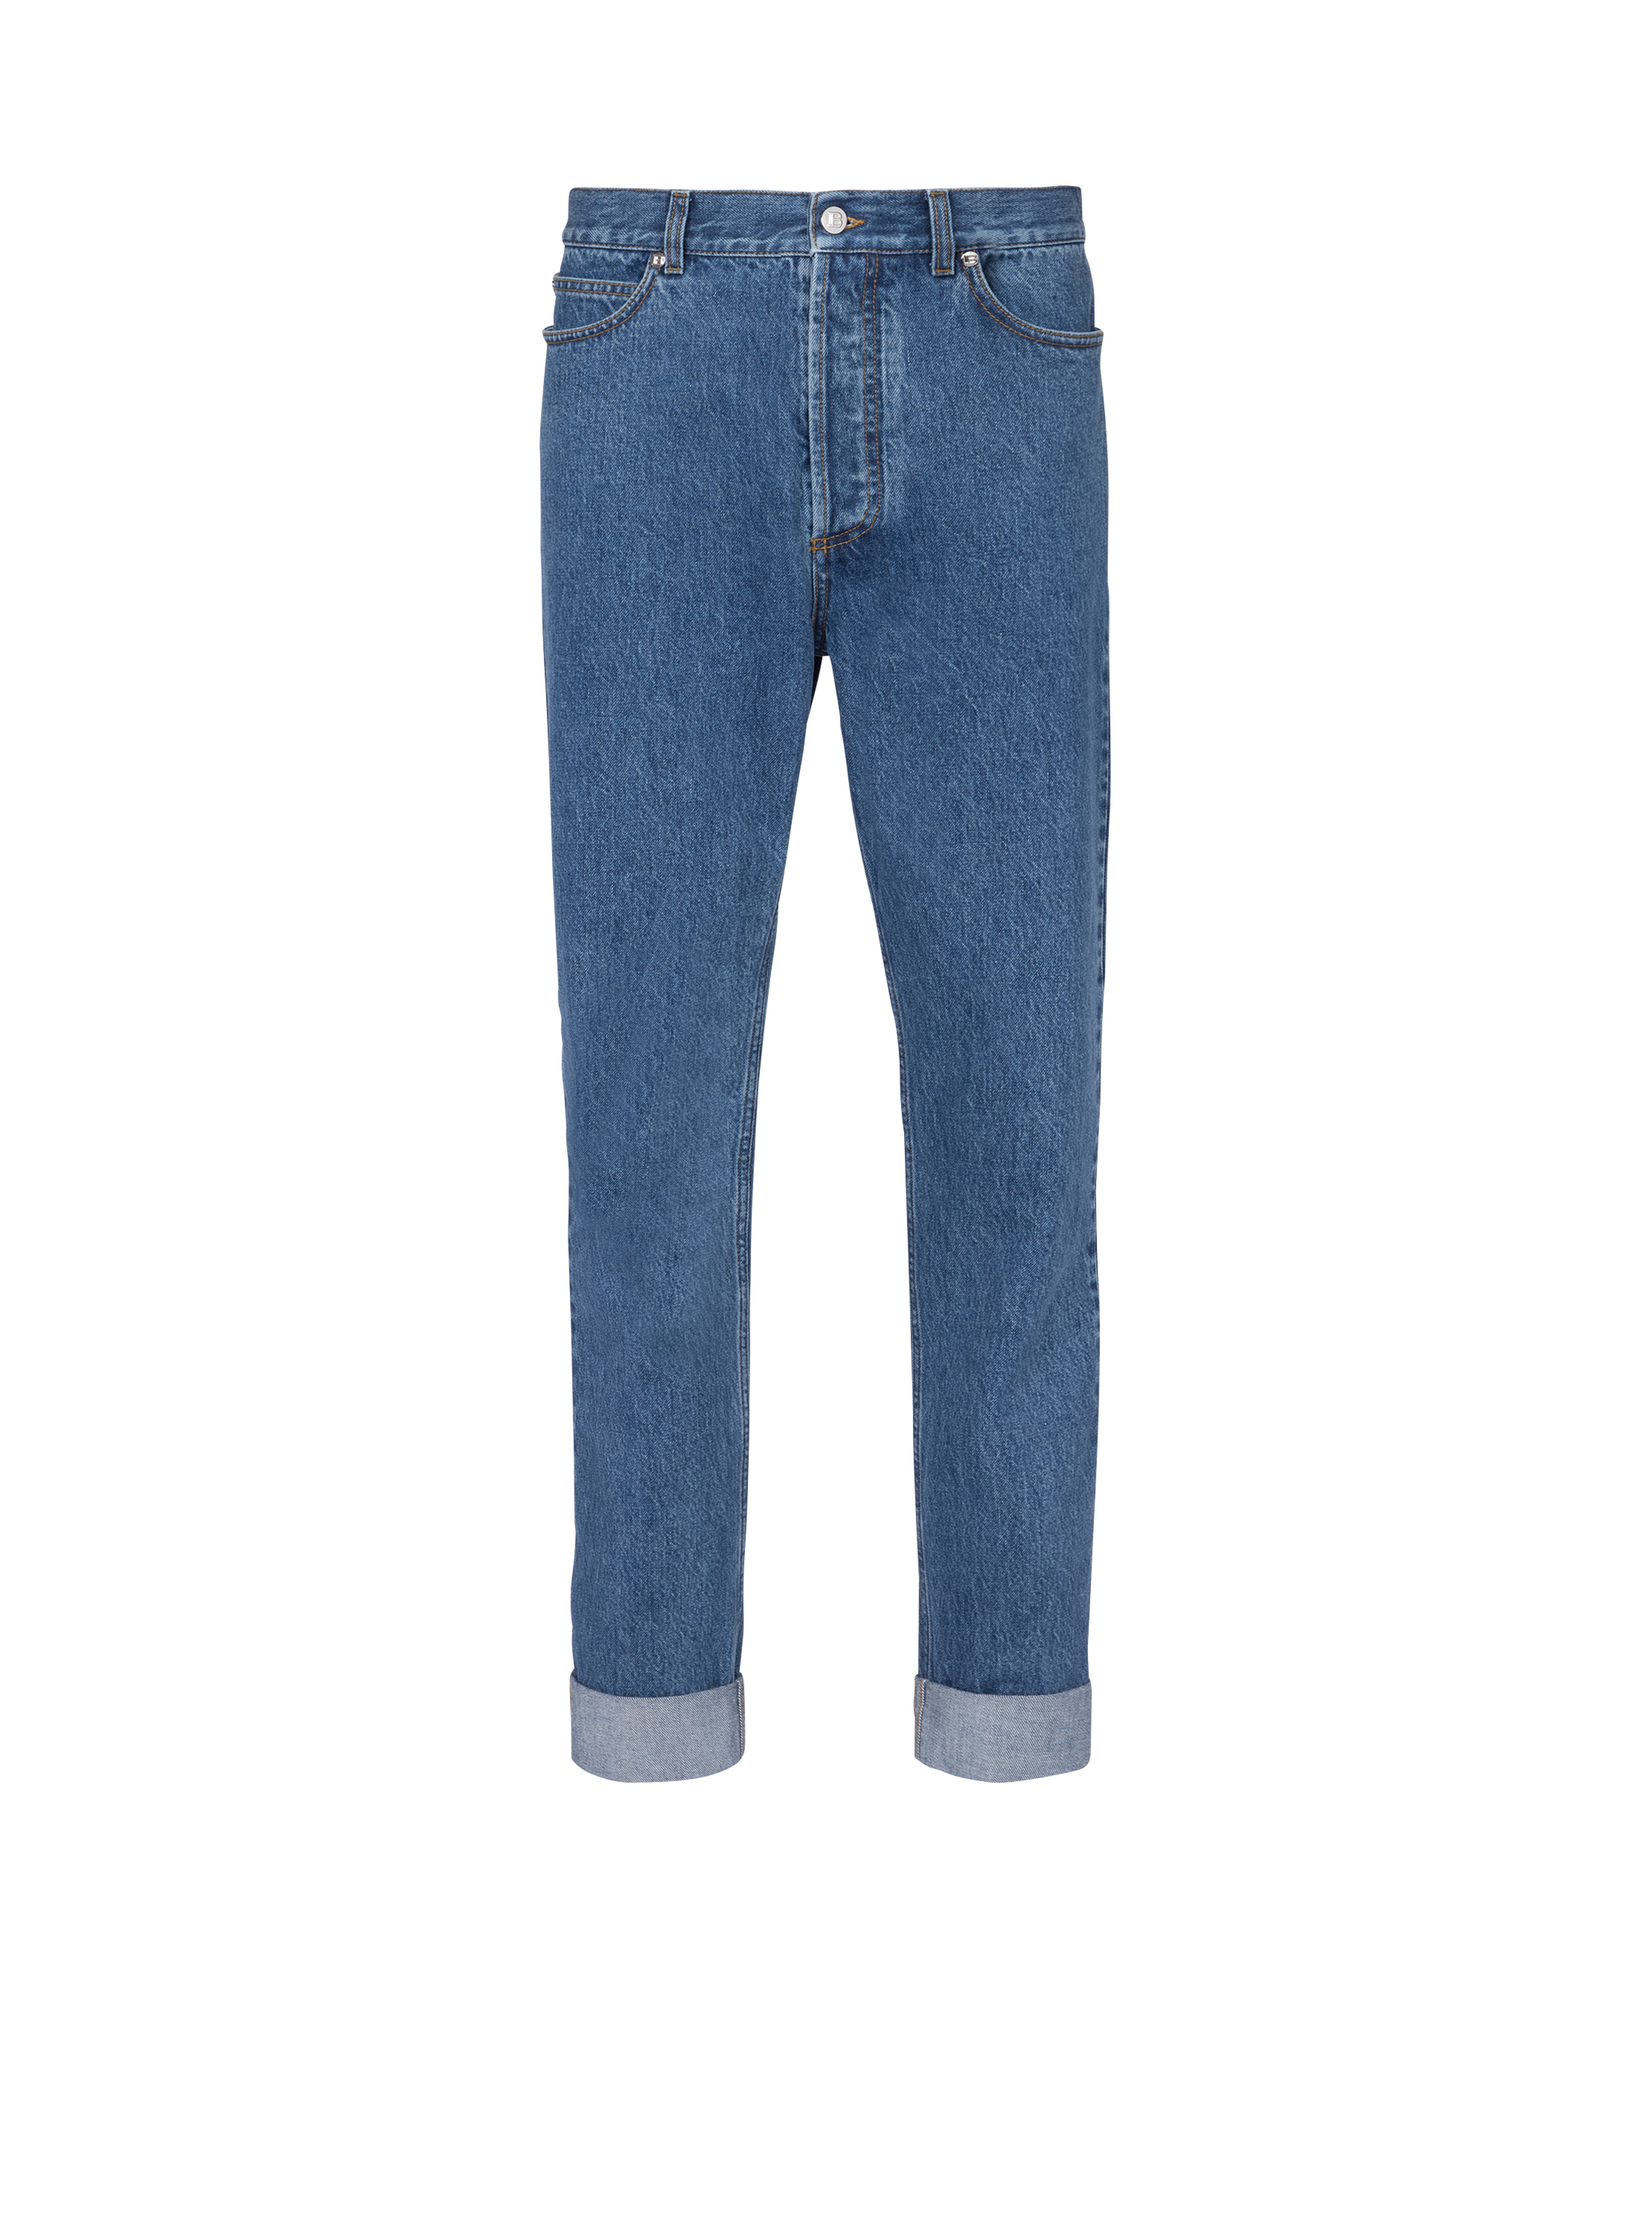 Balmain x Stranger Things - Straight jeans with hems, blue